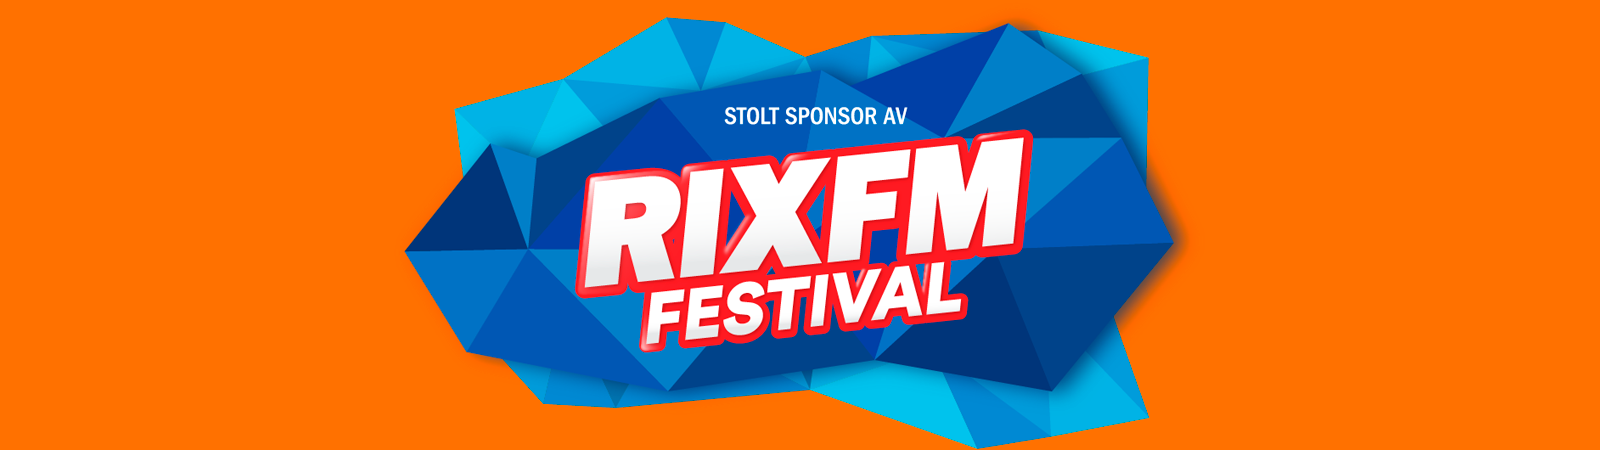 INGO är stolt sponsor av Rix FM festival